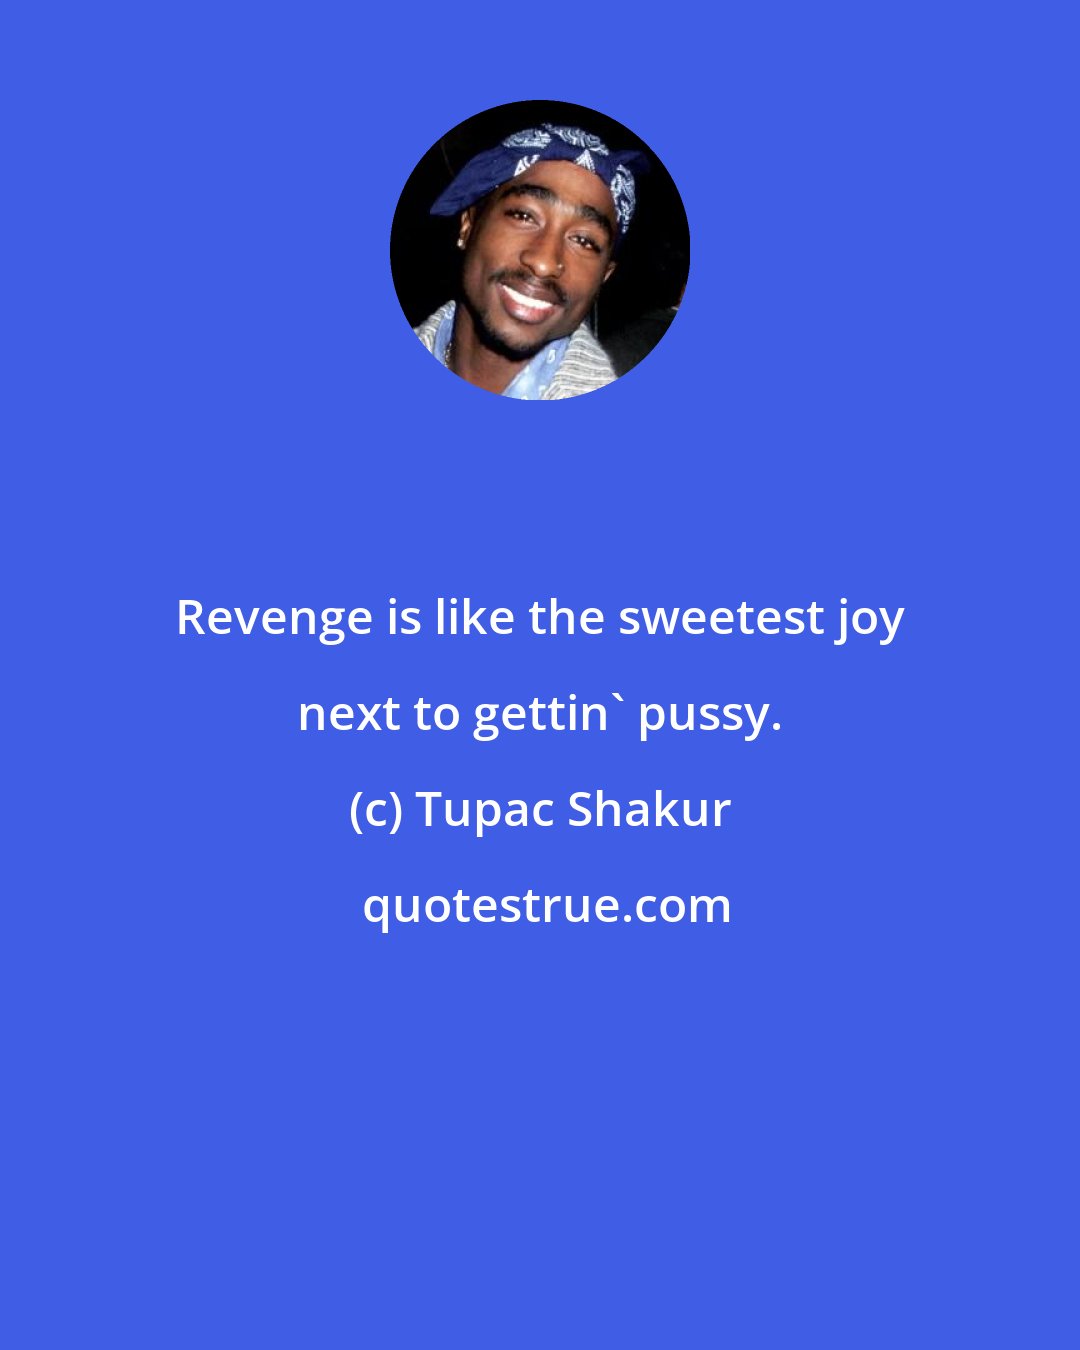 Tupac Shakur: Revenge is like the sweetest joy next to gettin' pussy.